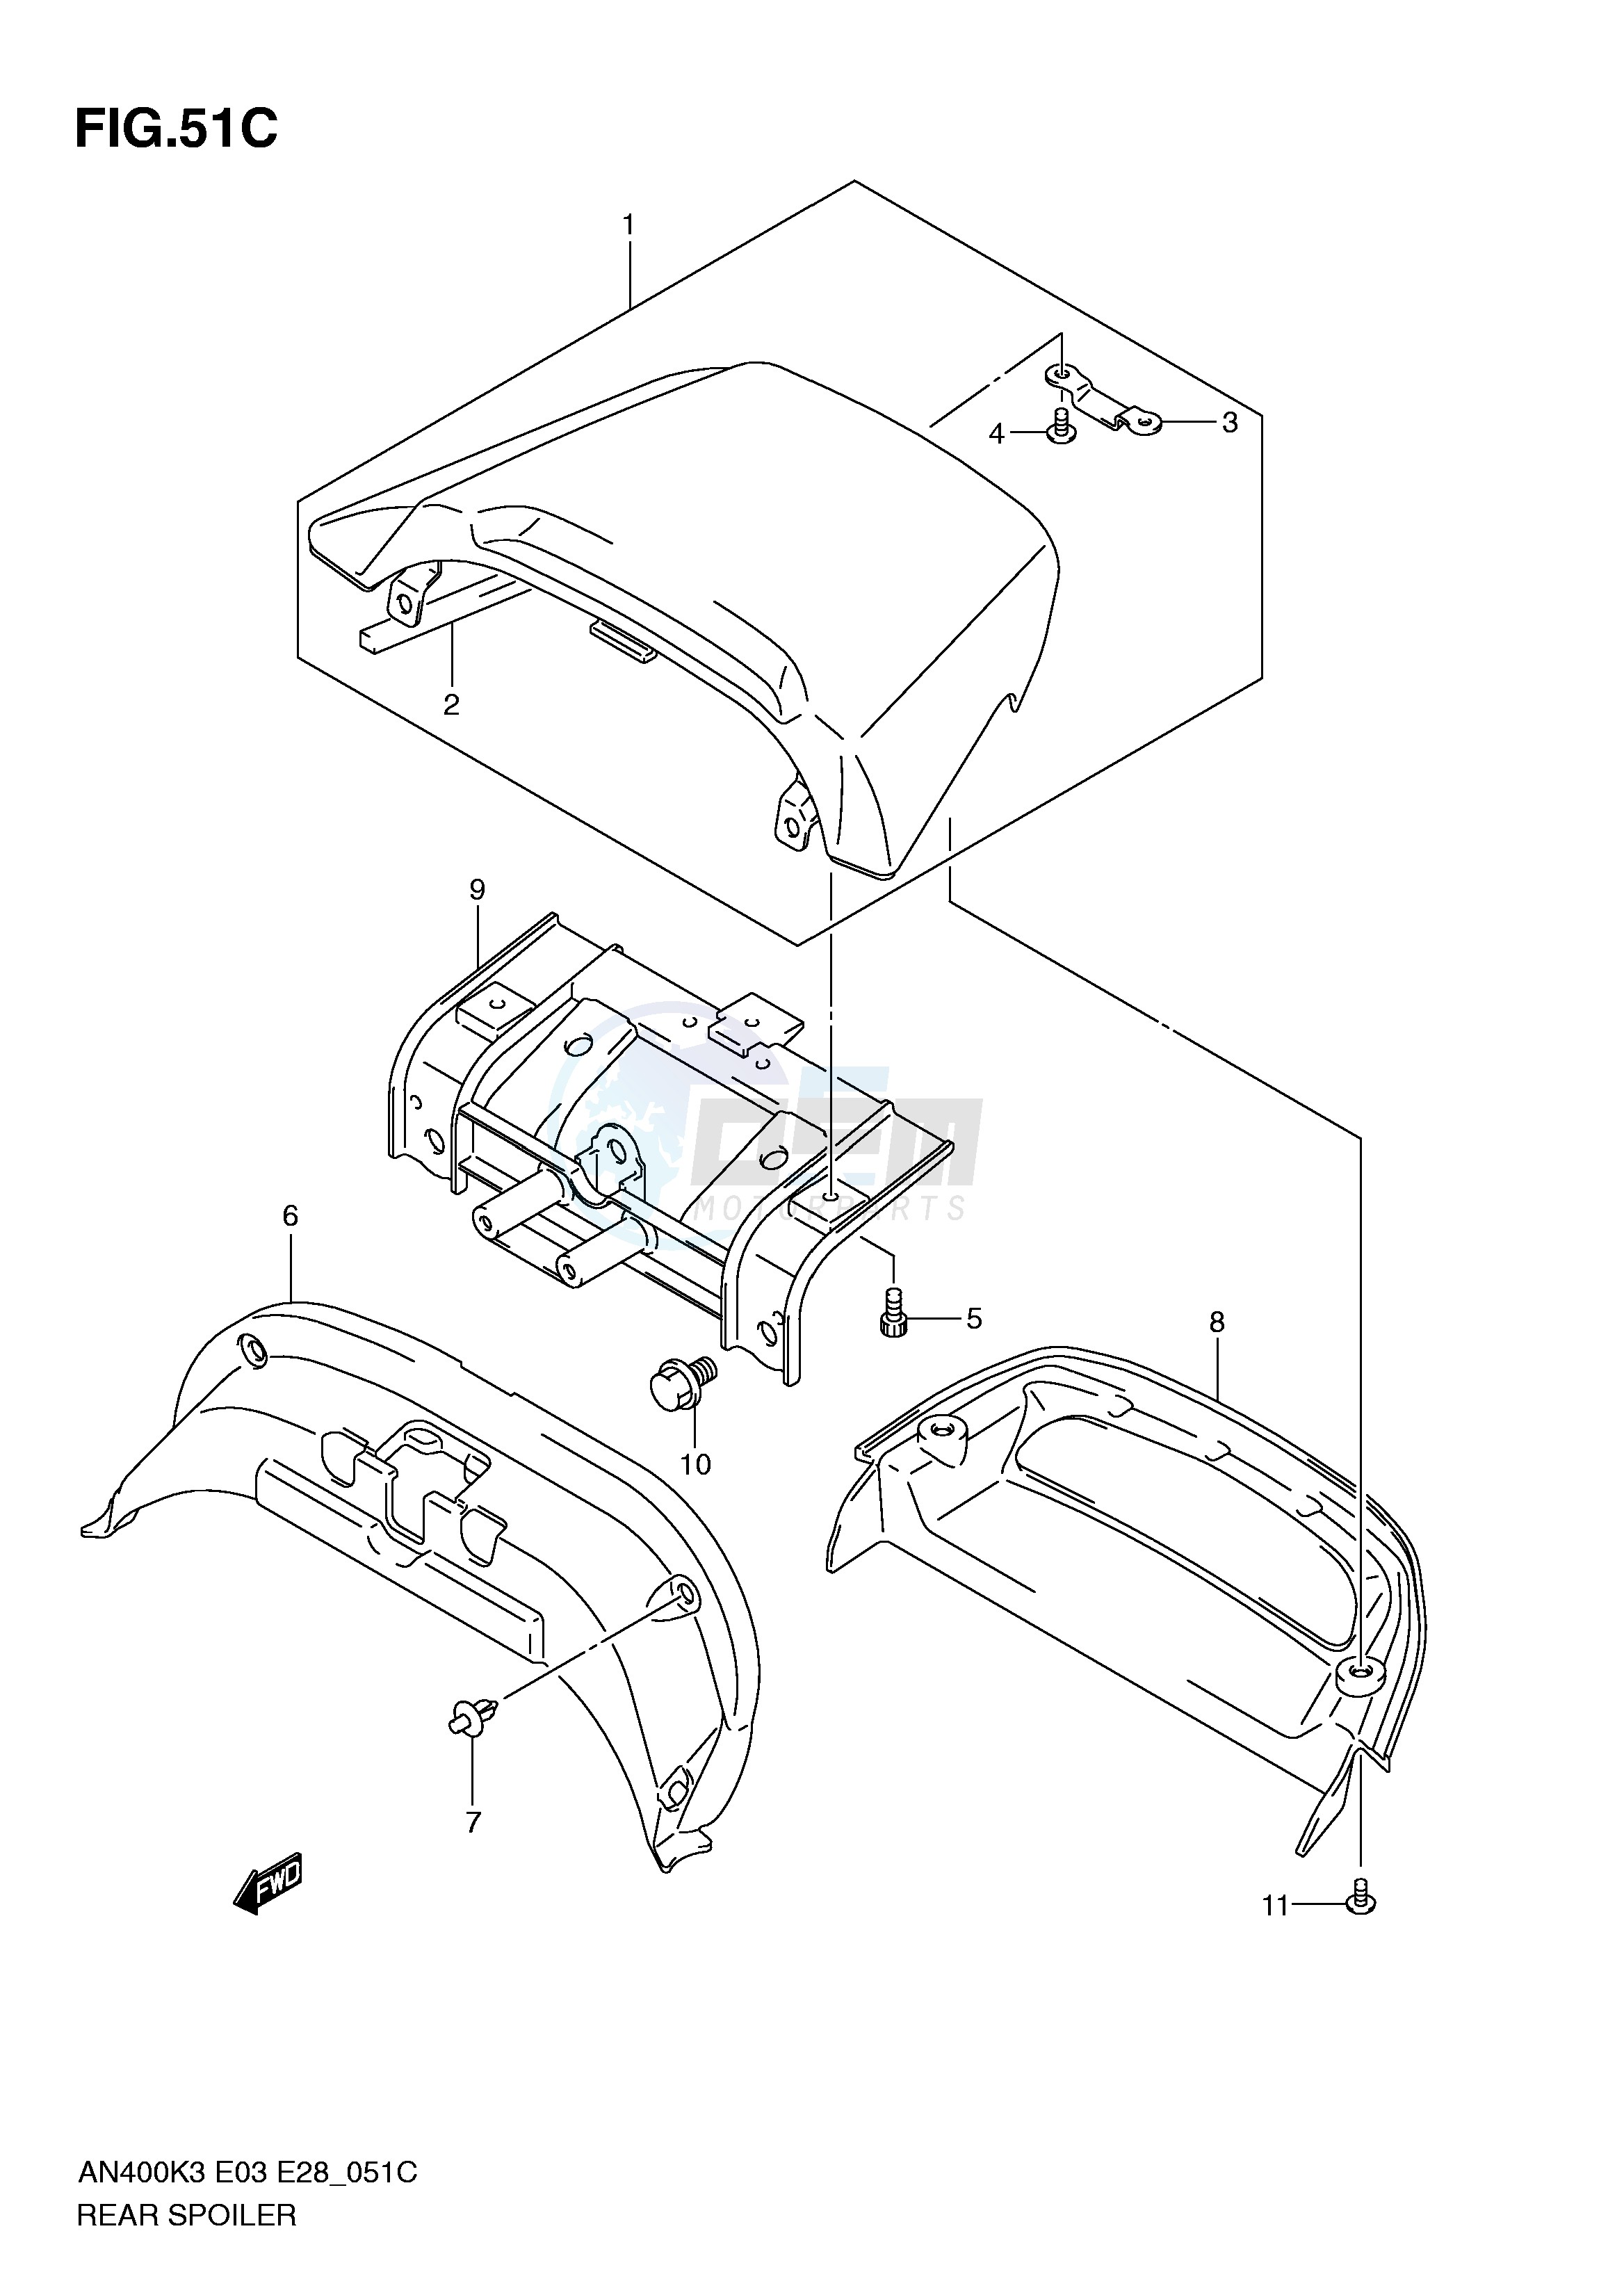 REAR SPOILER (AN400SK5 SK6) blueprint